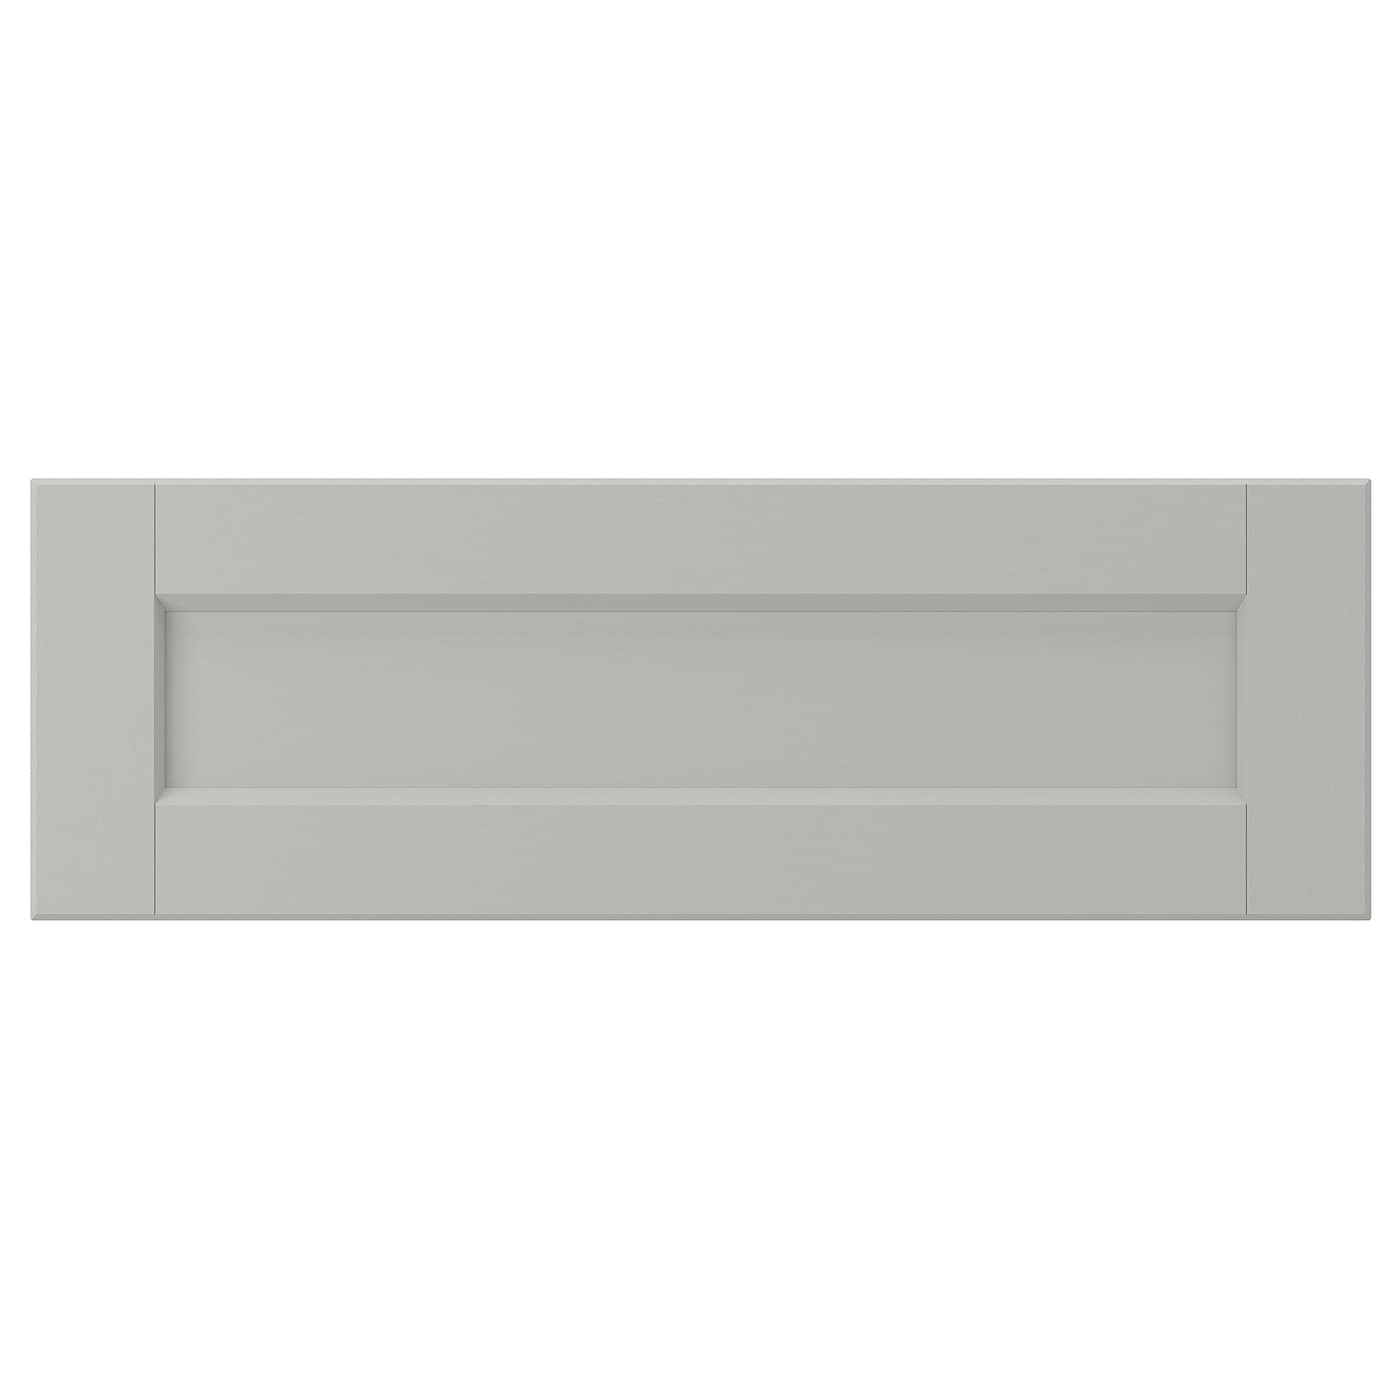 Фасад ящика - IKEA LERHYTTAN, 20х60 см, светло-серый, ЛЕРХЮТТАН ИКЕА